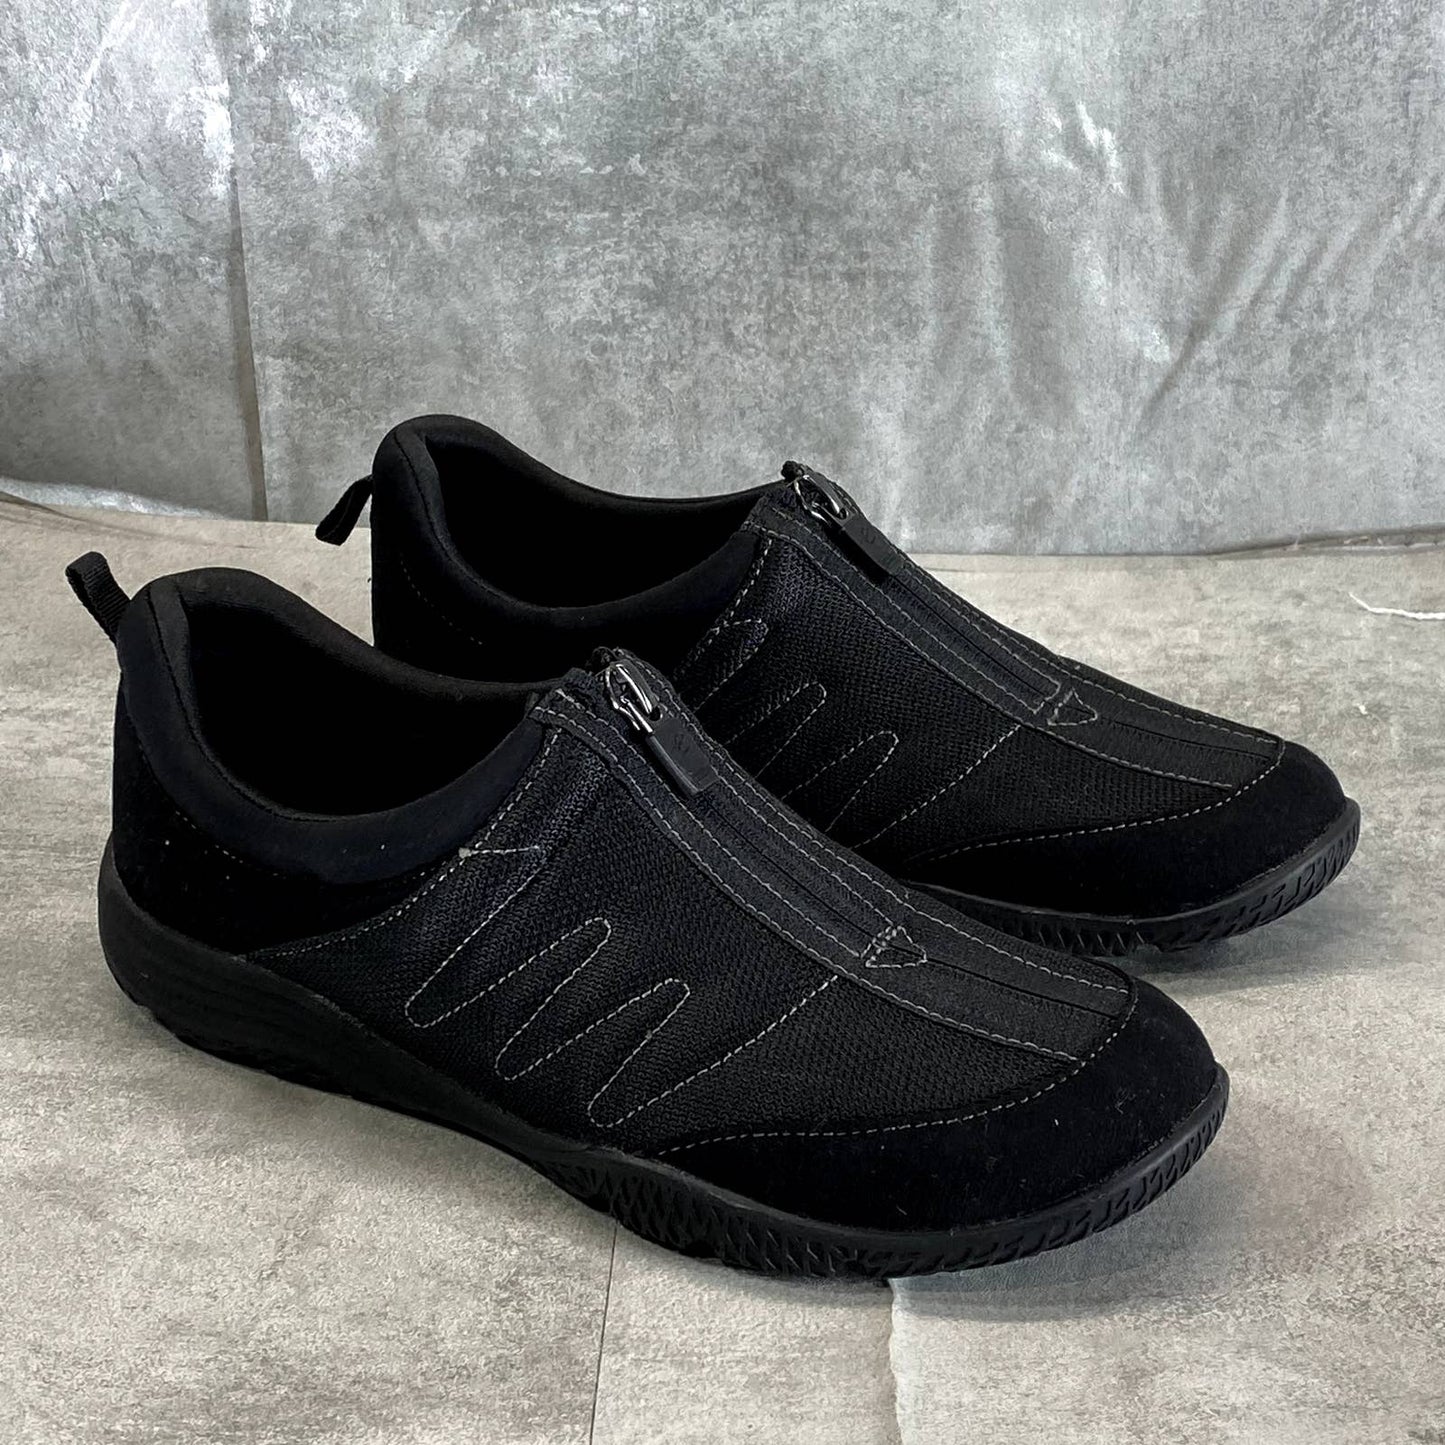 EASY SPIRIT Women's Black Bestrong Round-Toe Casual Slip-On Sneakers SZ 8